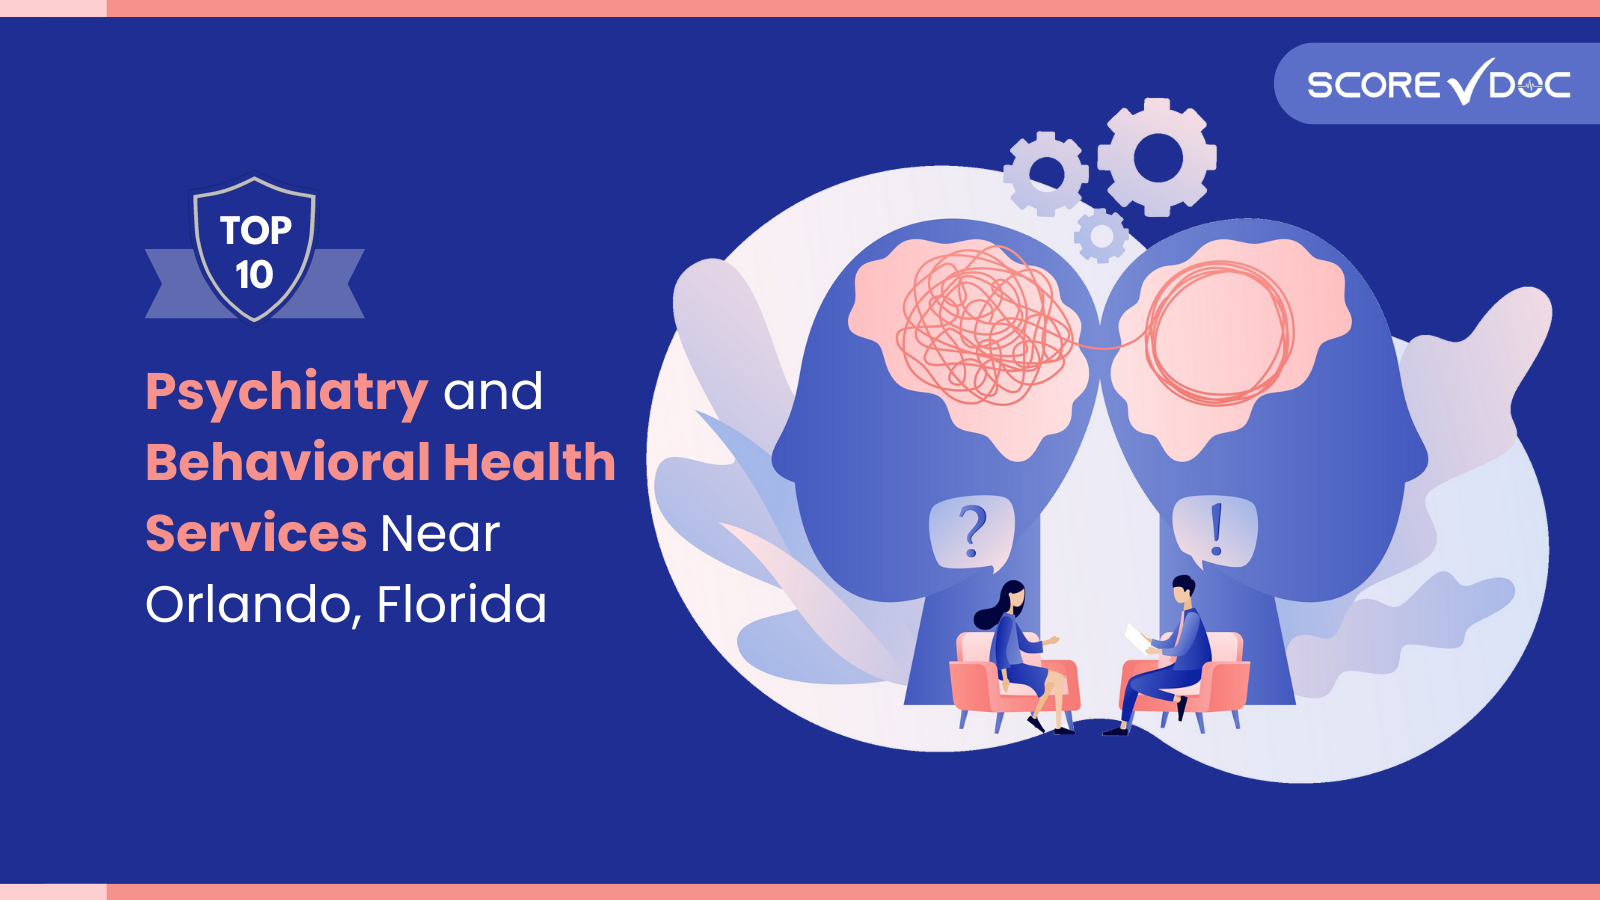 Top 10 Psychiatry and Behavioral Health Services Near Orlando, FL